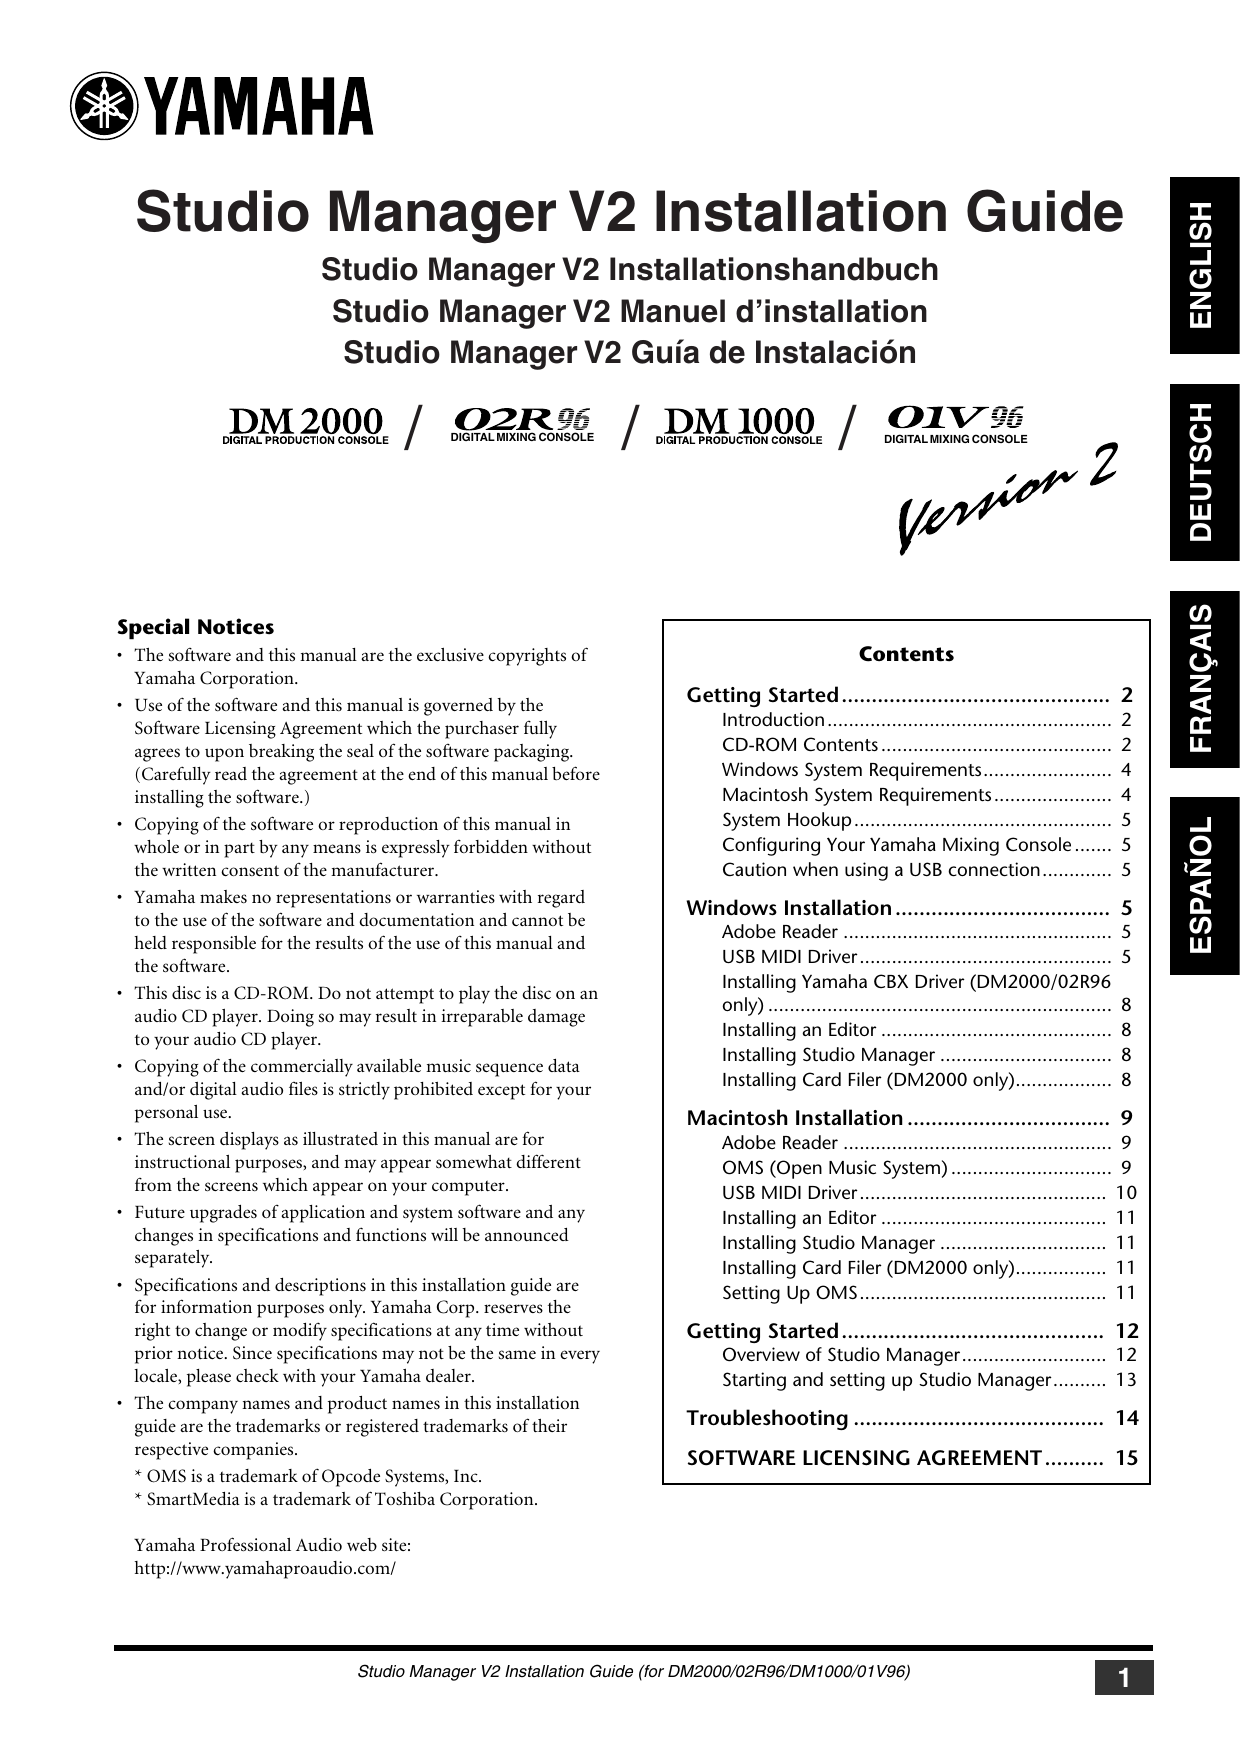 Yamaha DM1000 Version 2 Studio Manager V2 Installation Guide | Manualzz